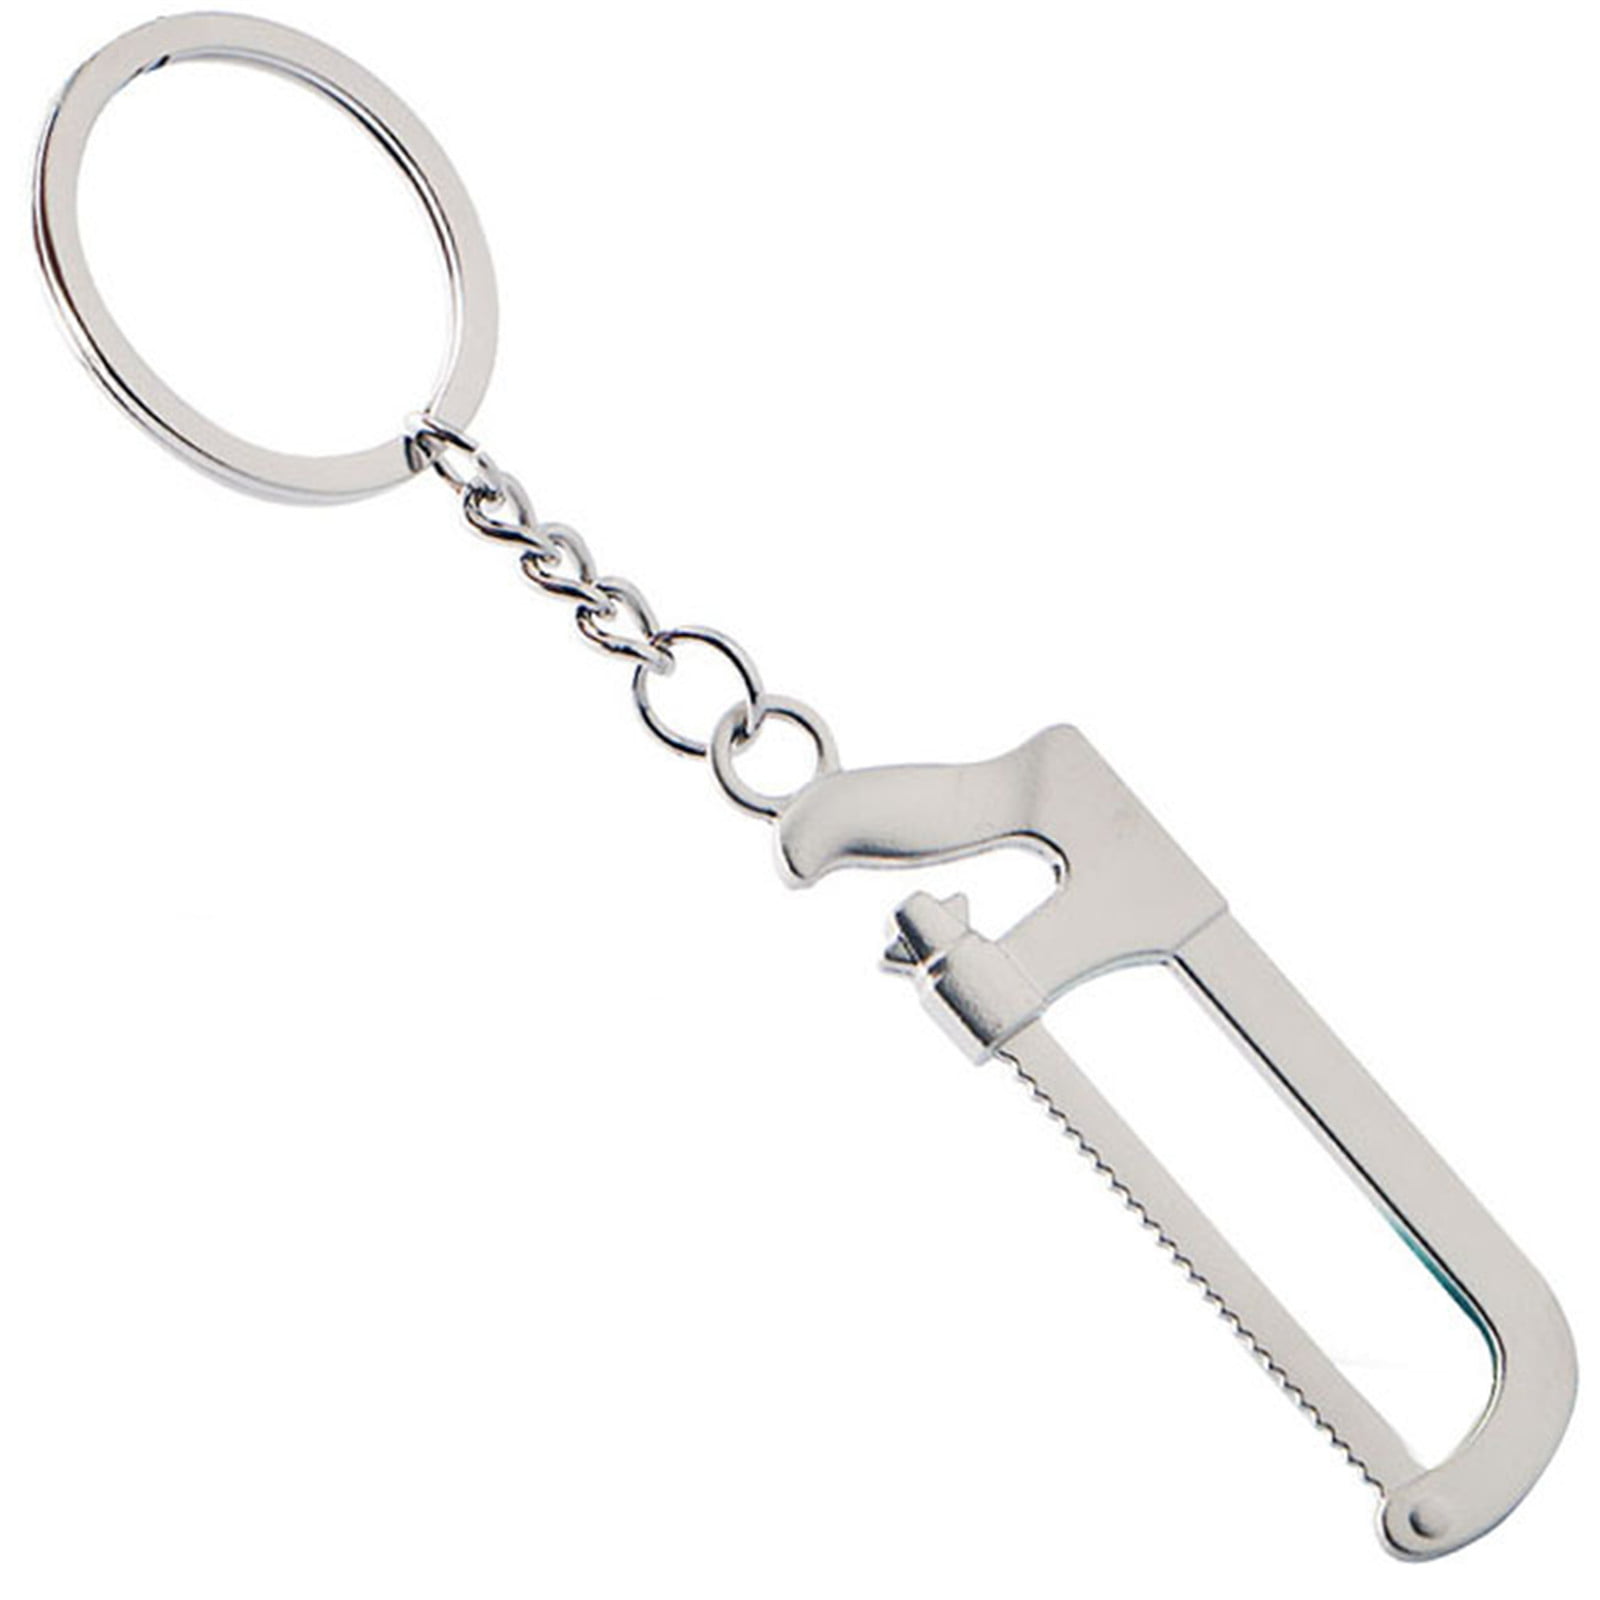 Creative Key Chain Ring Keyring Silver Poo Keychain Pendant Gift Tool 